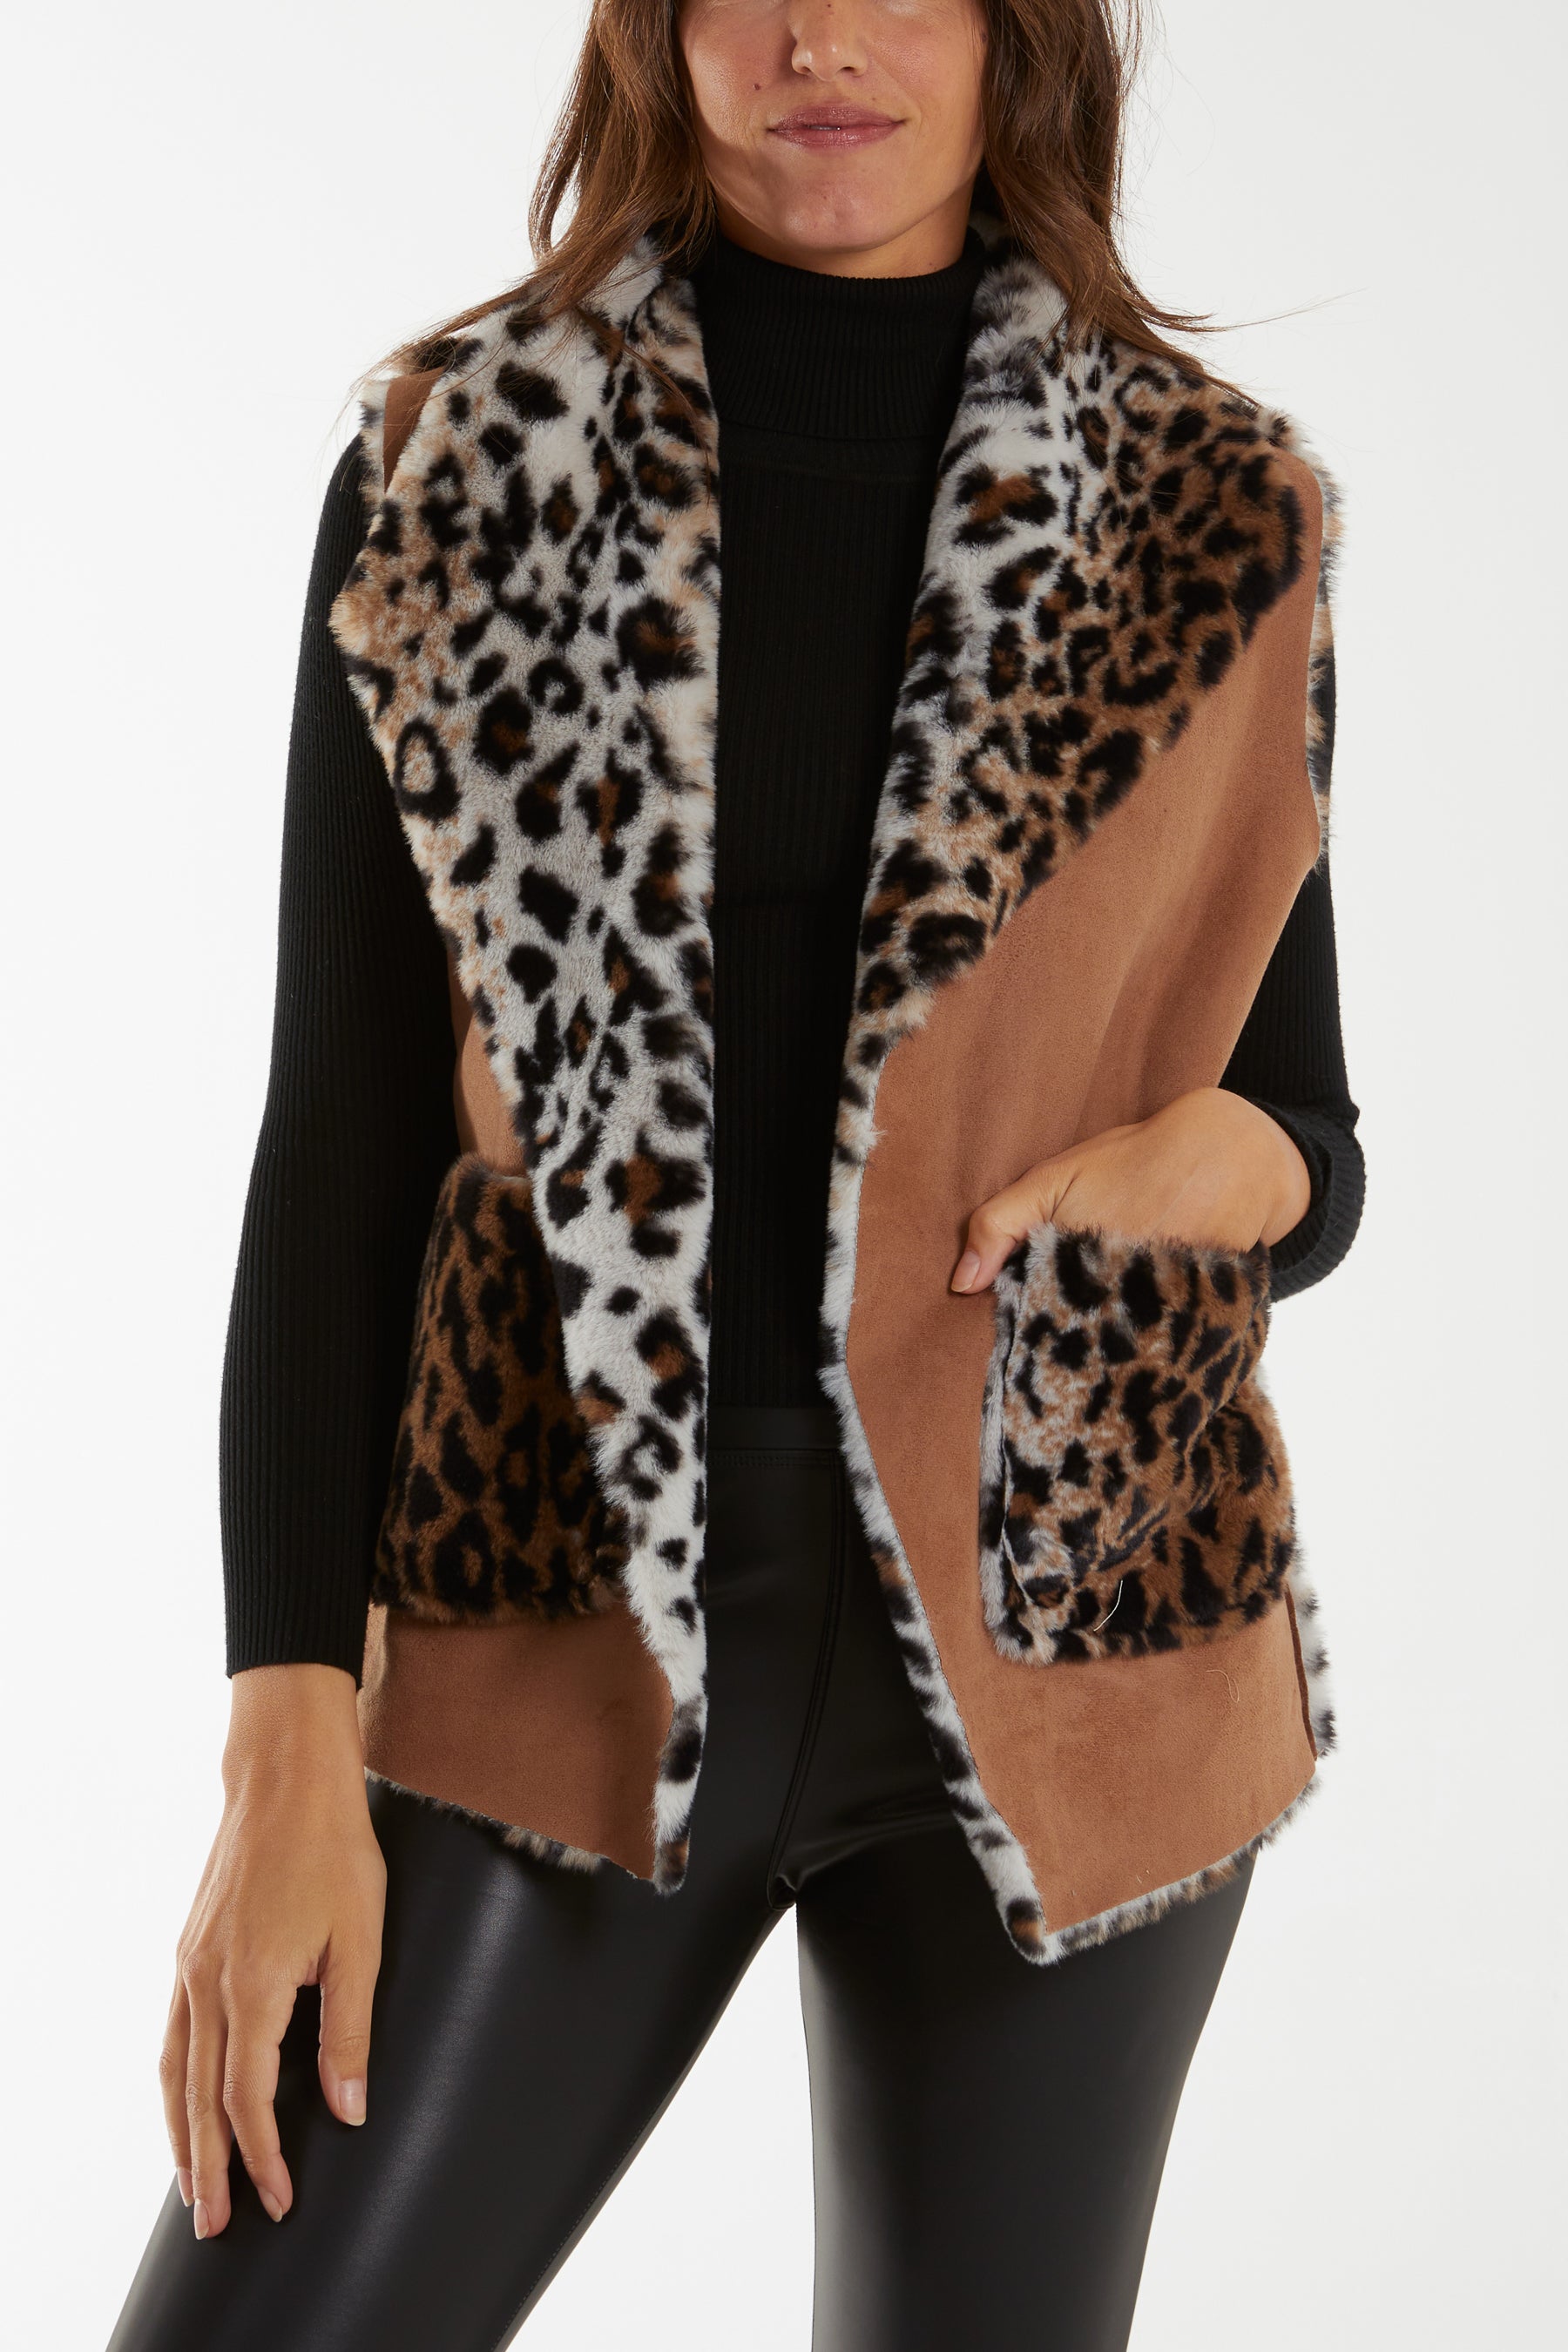 Leopard Print Fur Sleeveless Jacket